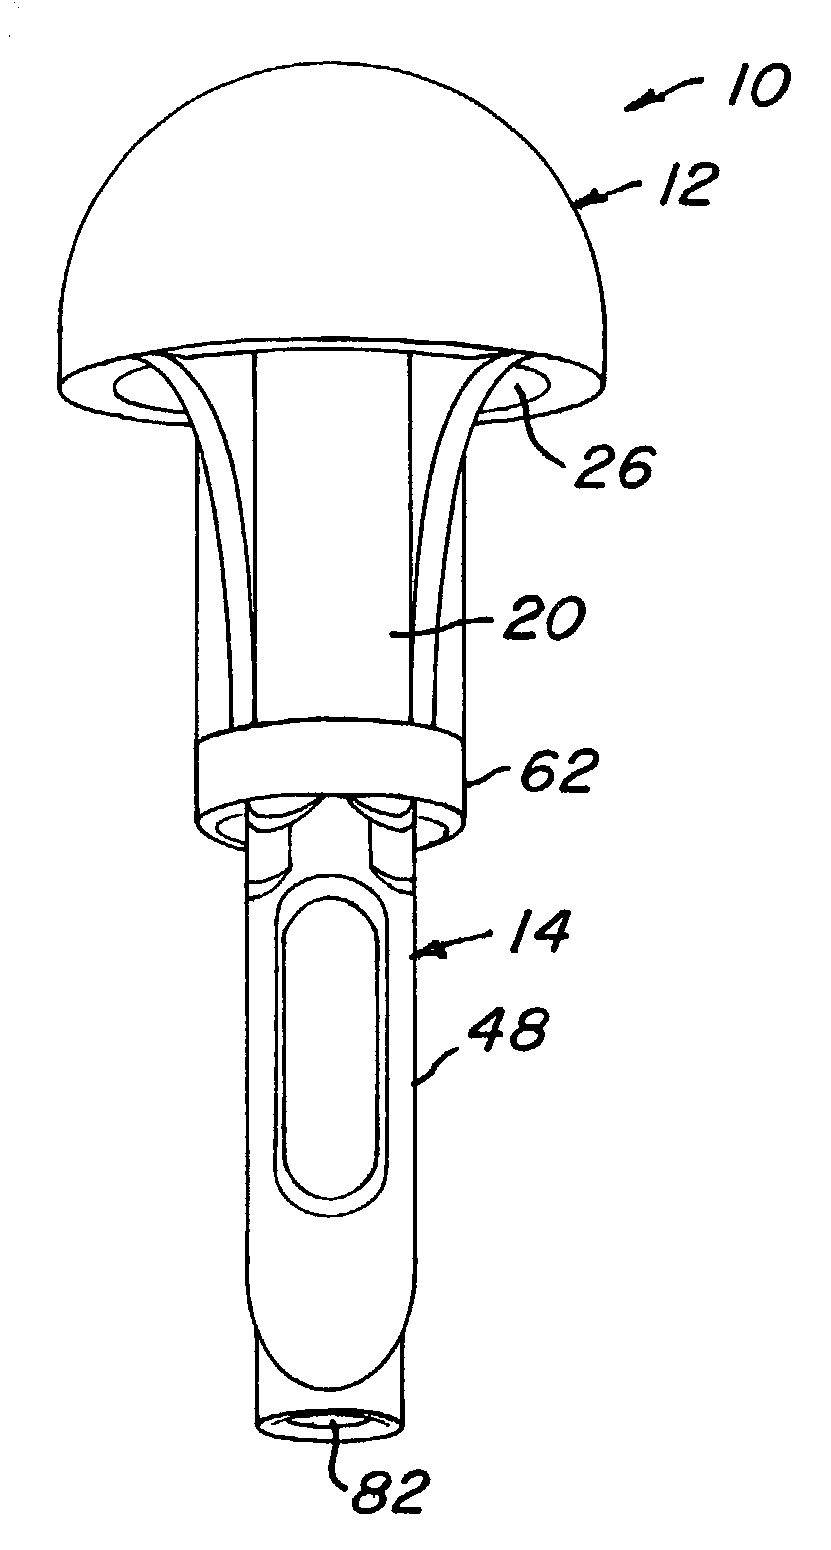 Earplug and method of manufacturing an earplug